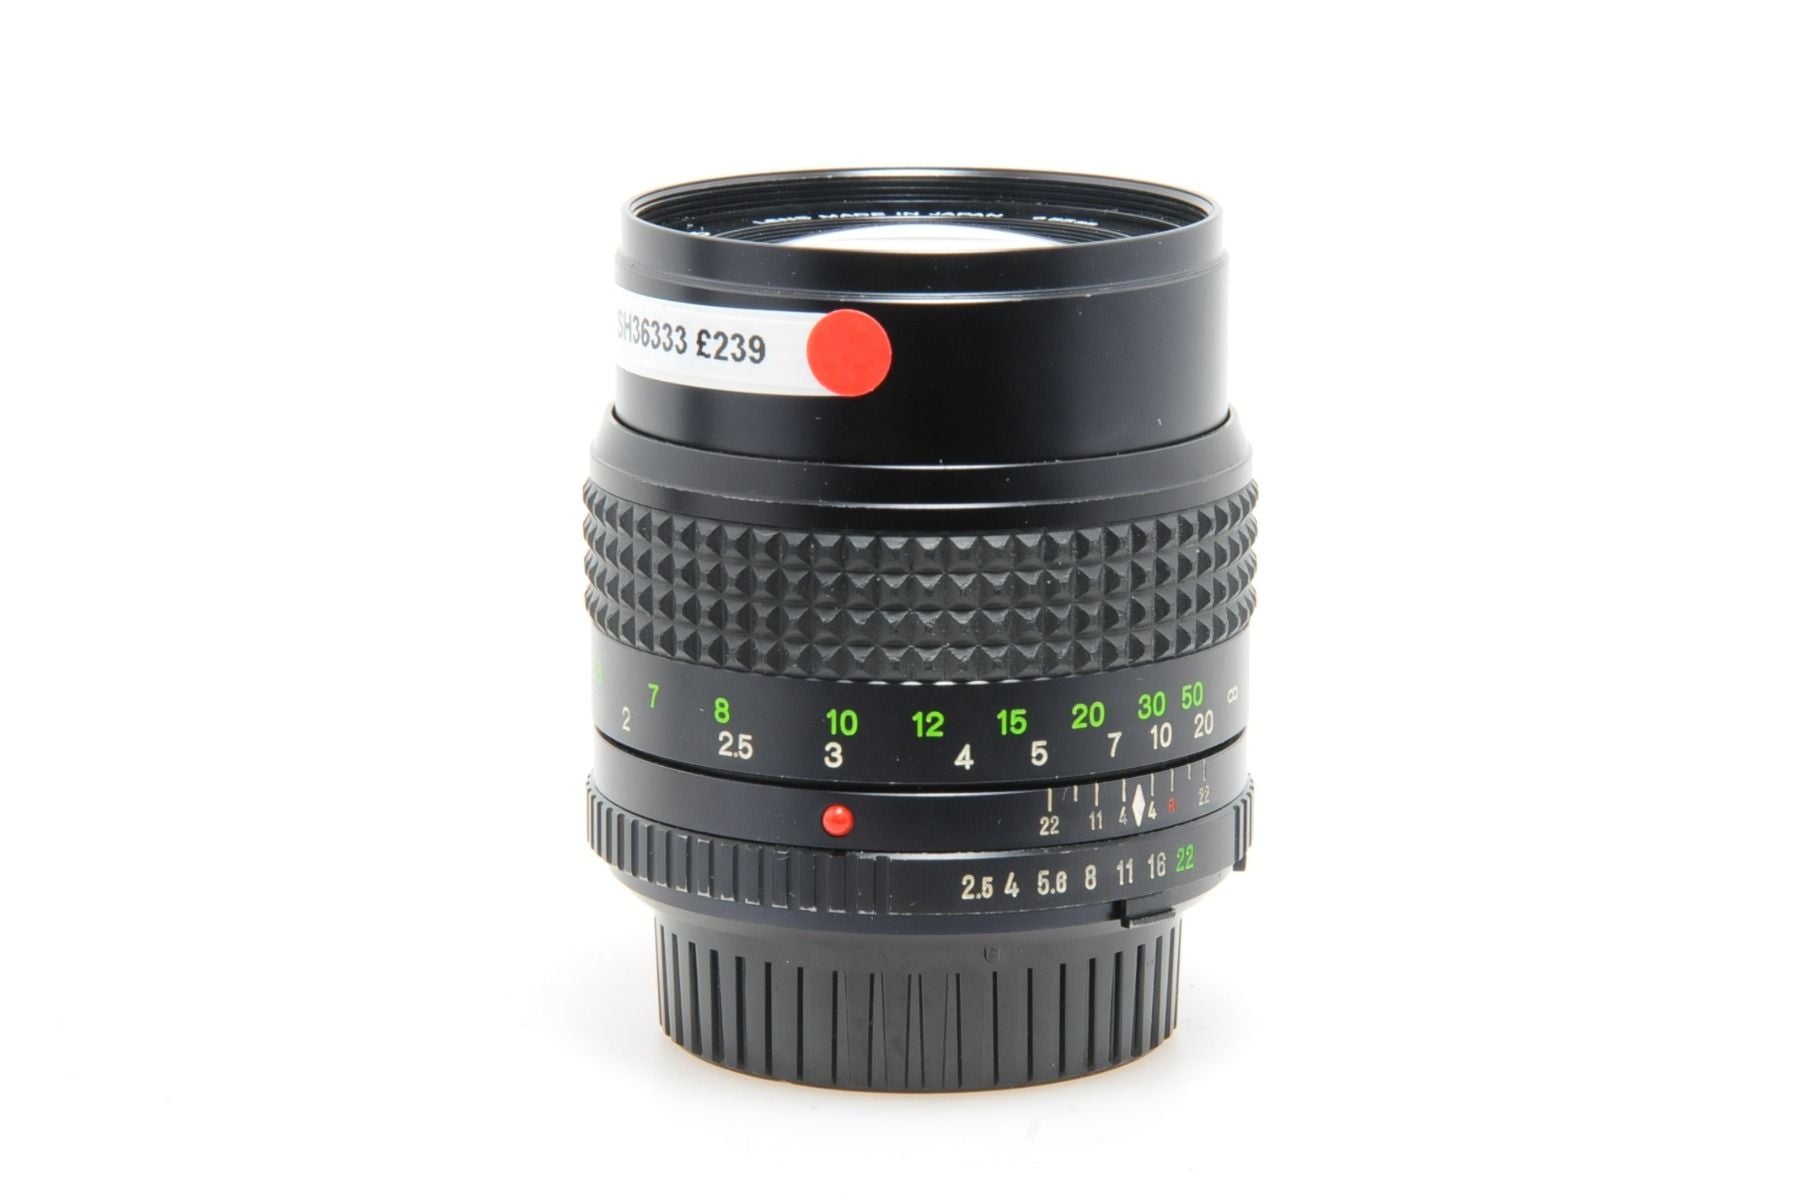 Product Image of Used Minolta MD Tele Rokkor 100mm F2.5 portrait lens (SH36333)